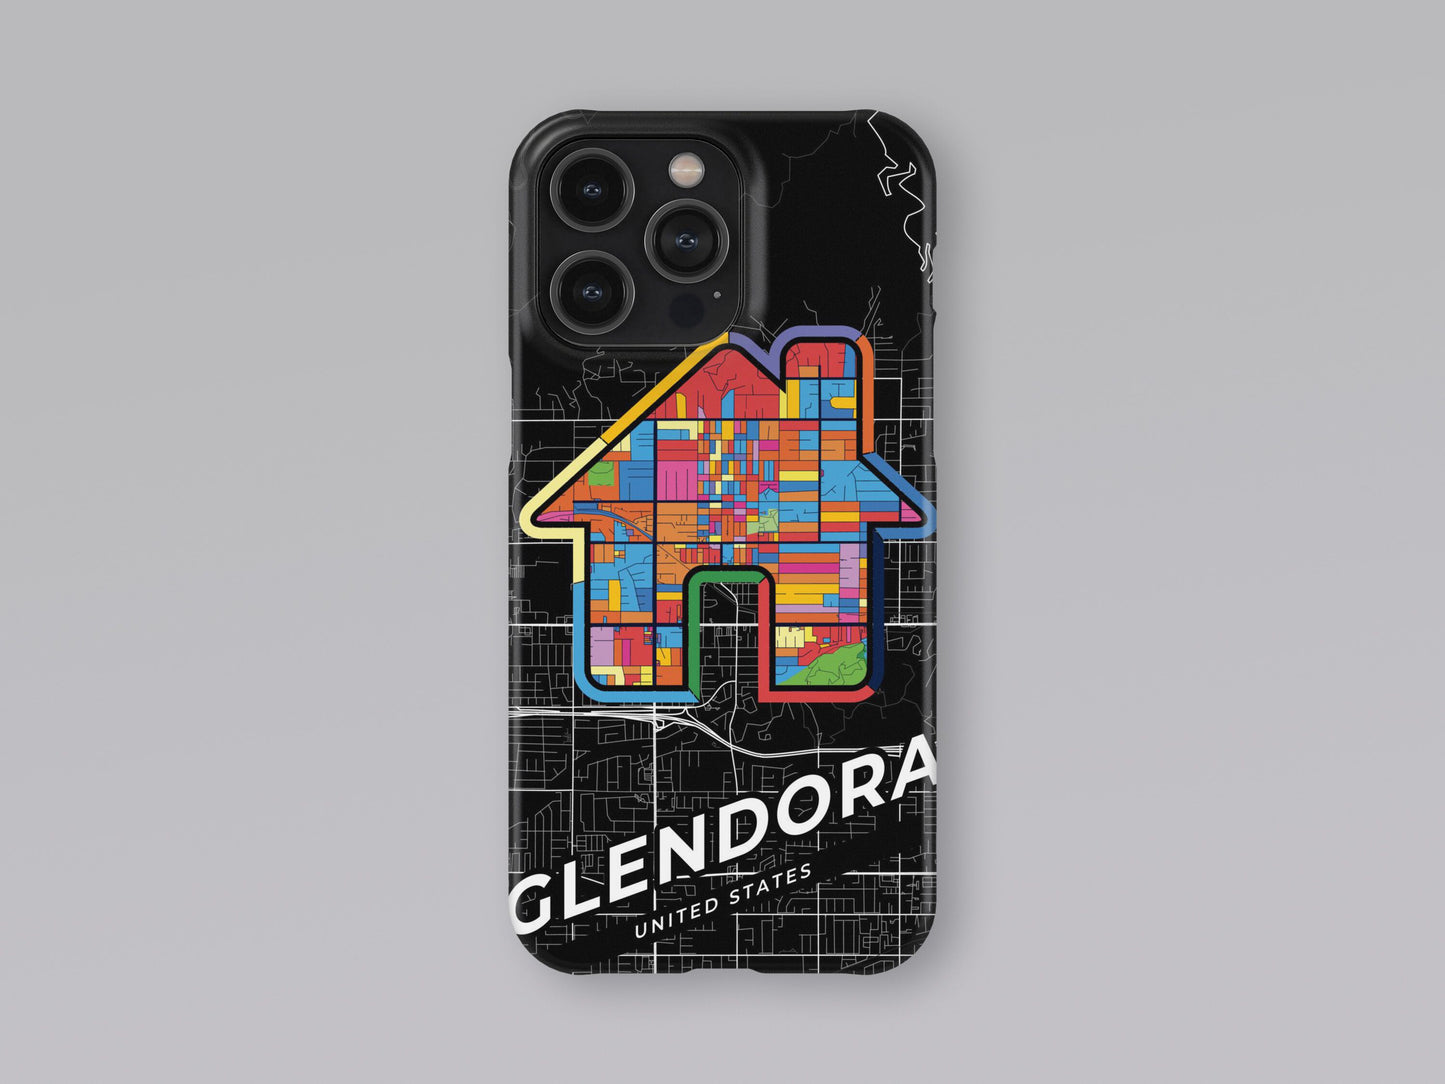 Glendora California slim phone case with colorful icon. Birthday, wedding or housewarming gift. Couple match cases. 3